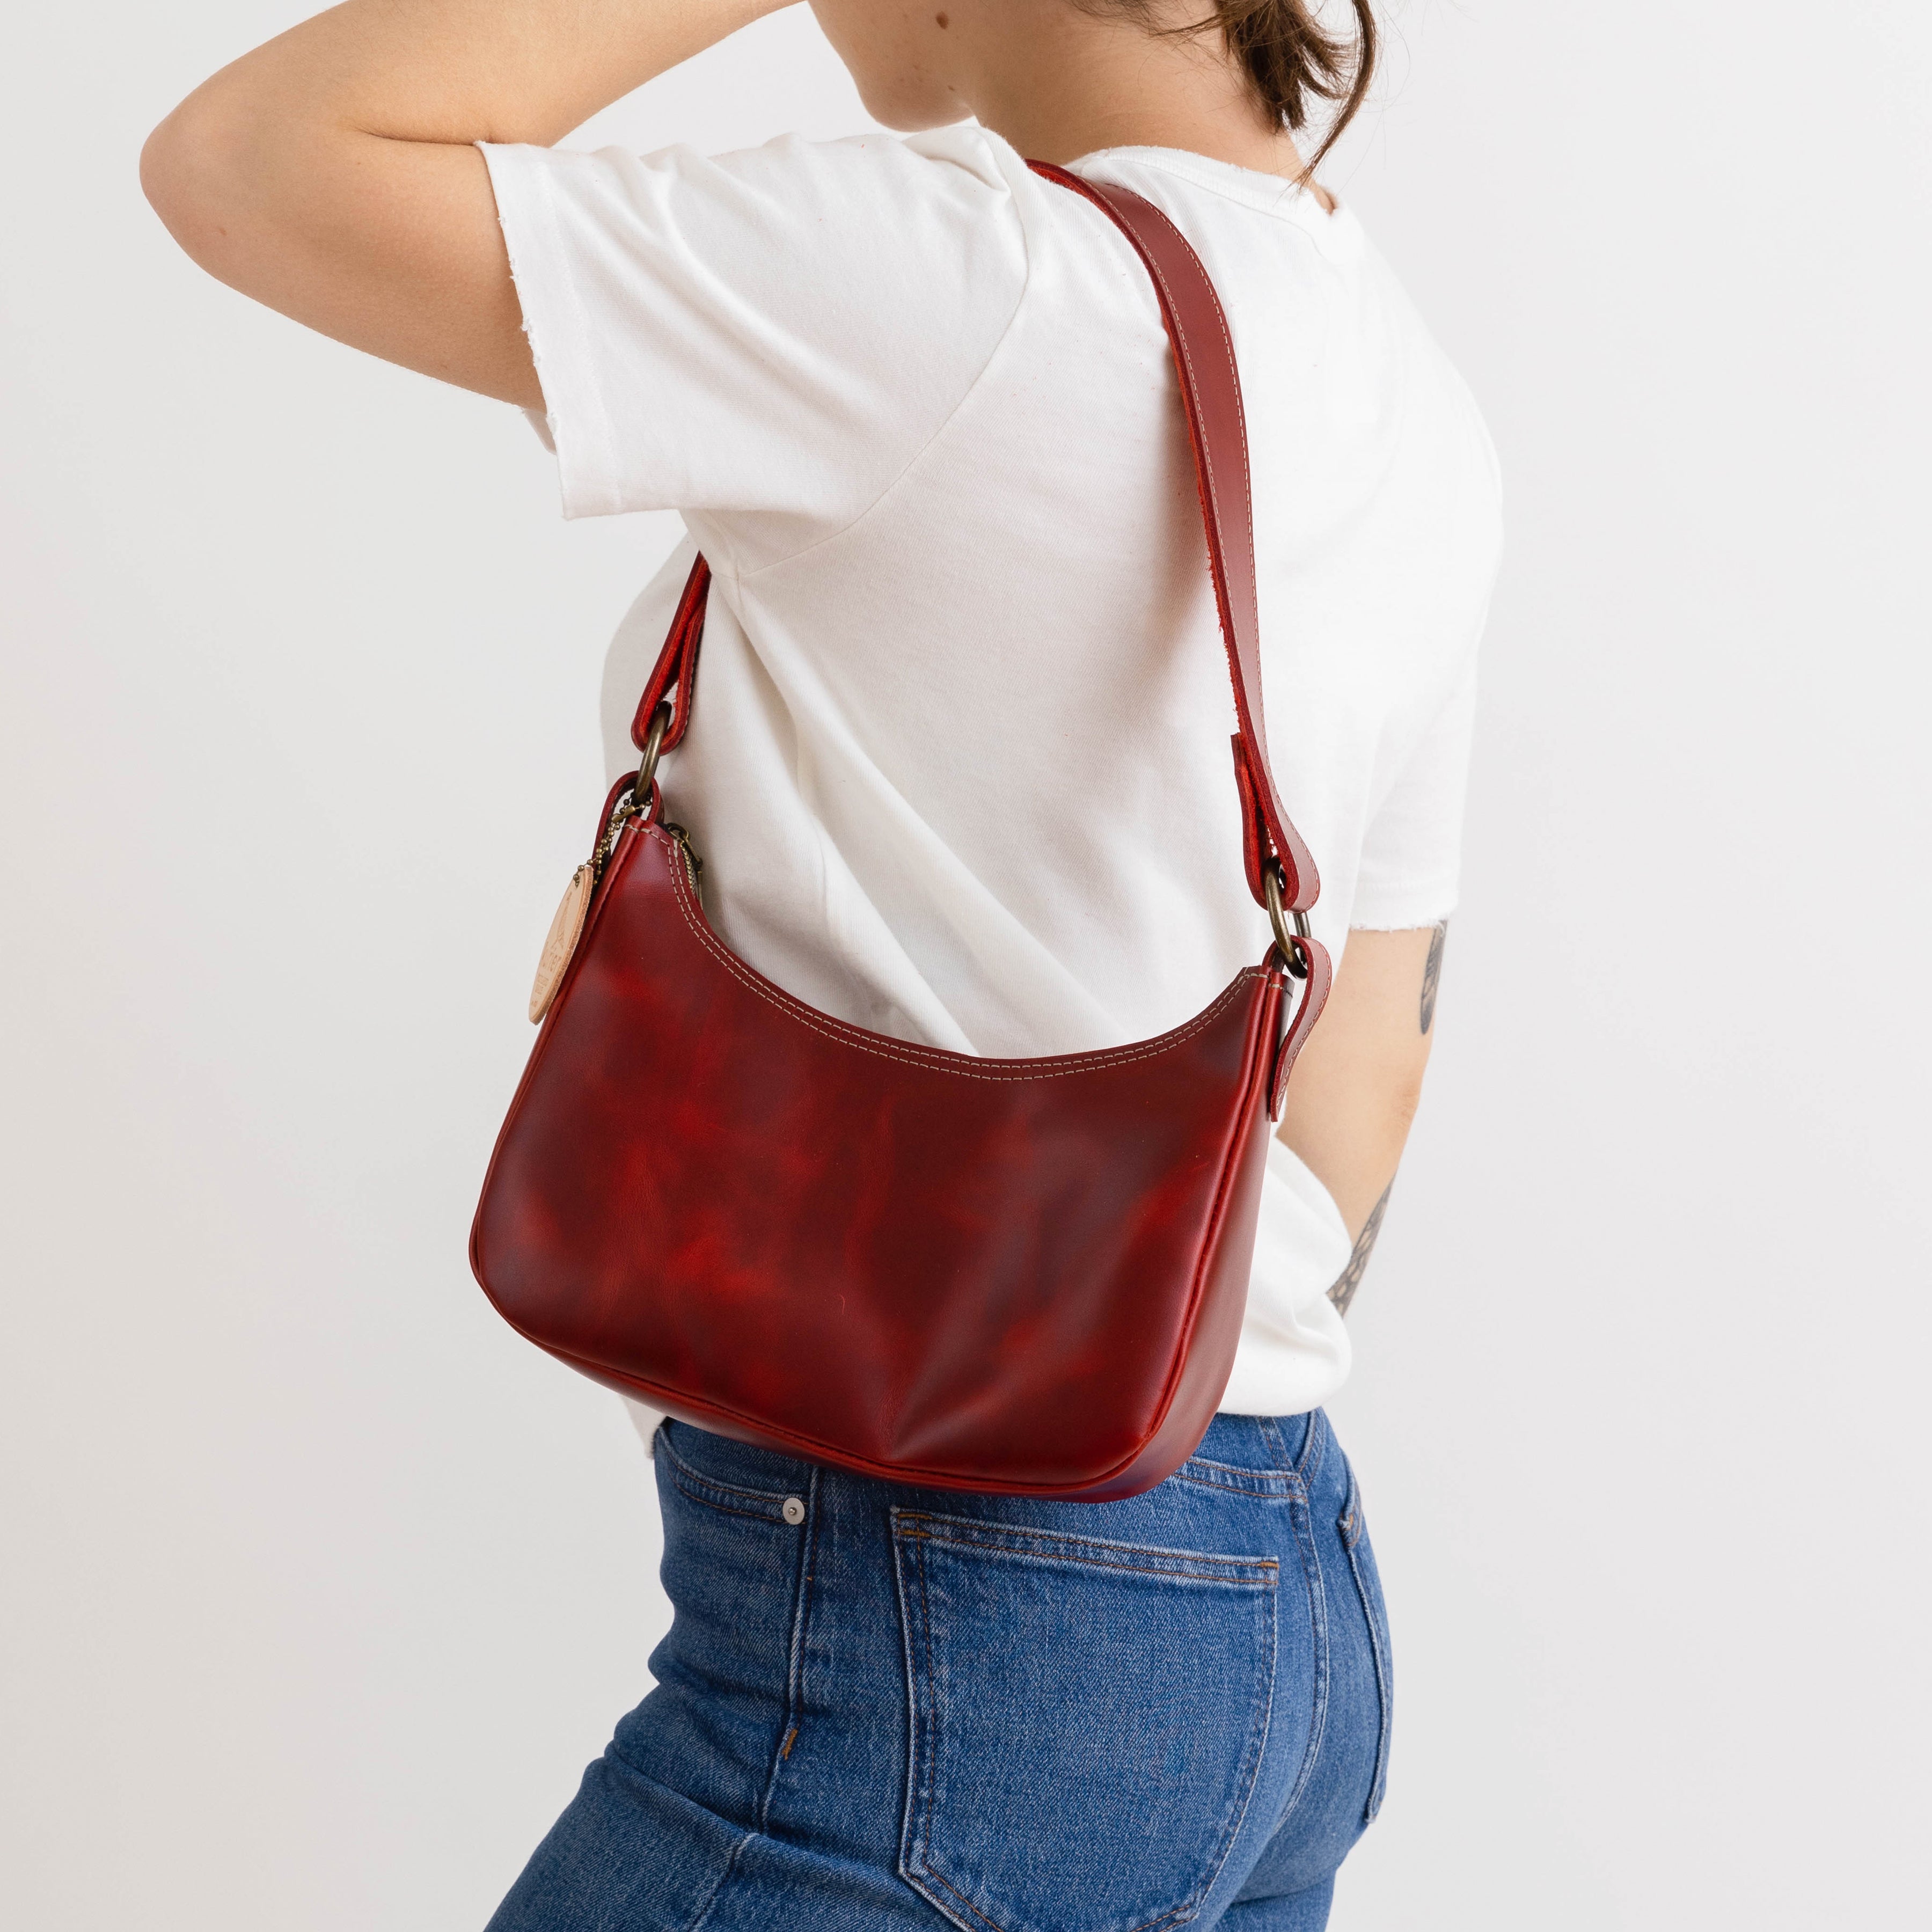 Gigi | Handbag